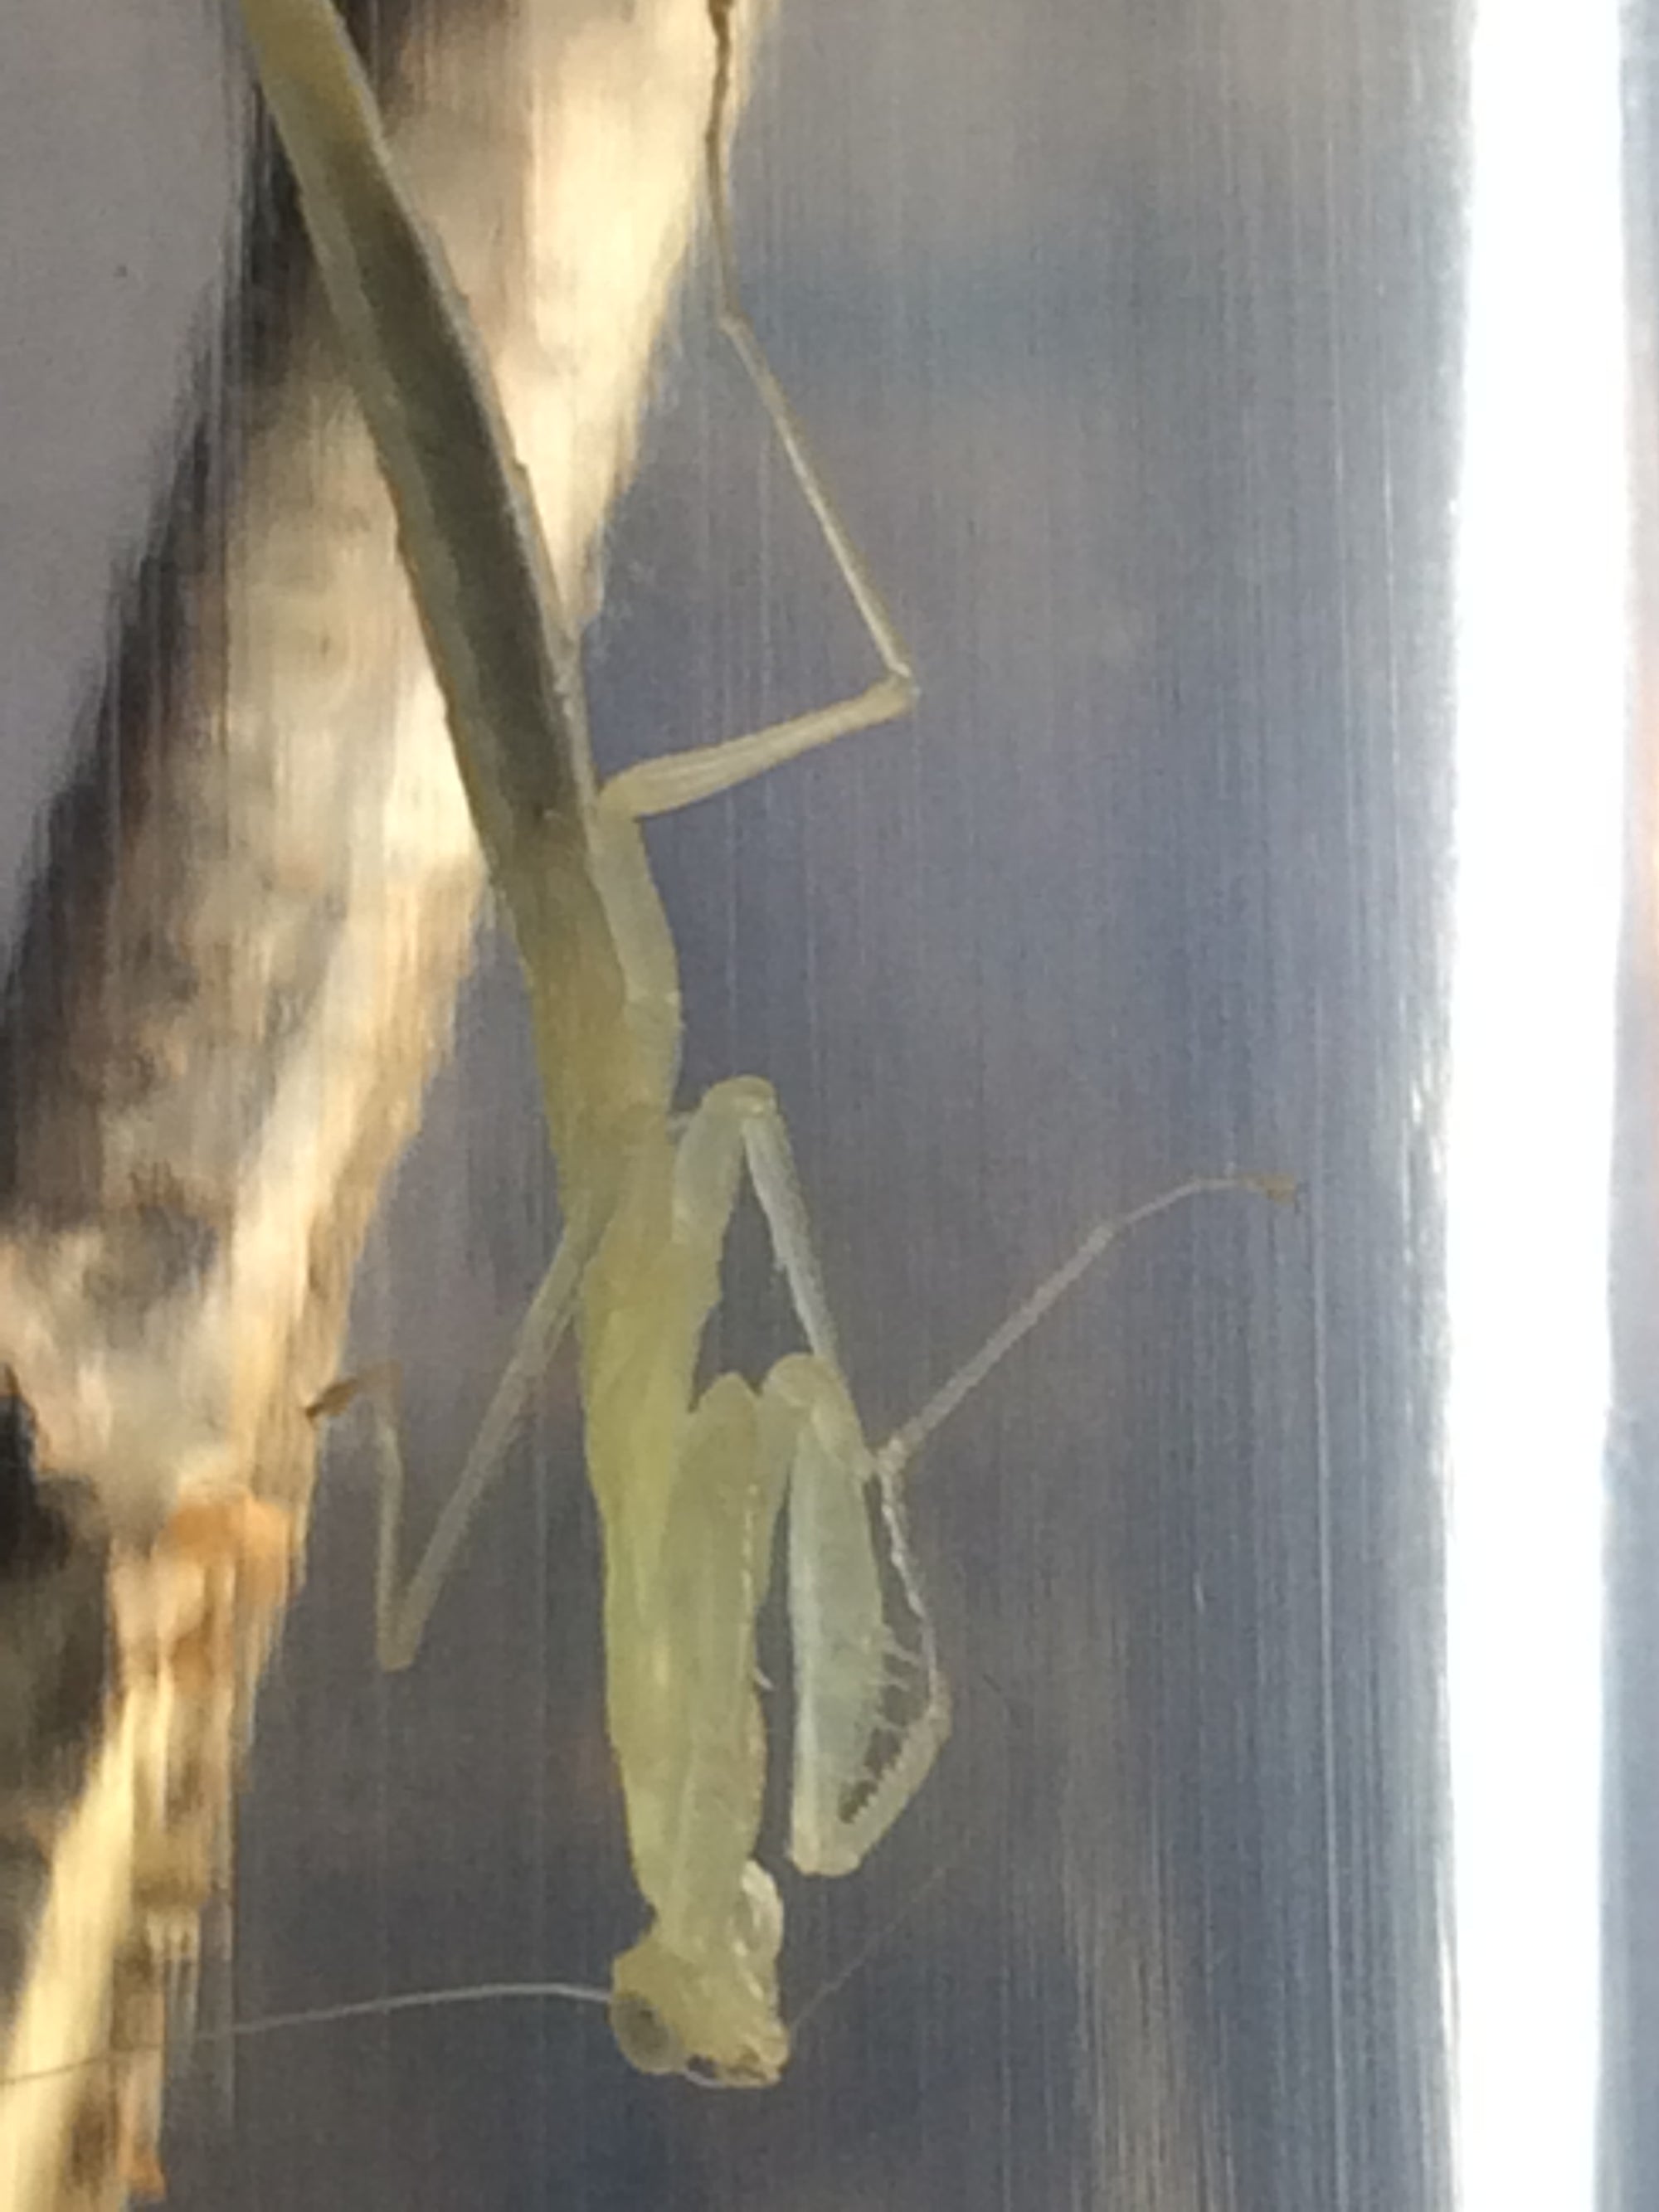 Sinomantis denticulata “Glass Mantis” - USMANTIS